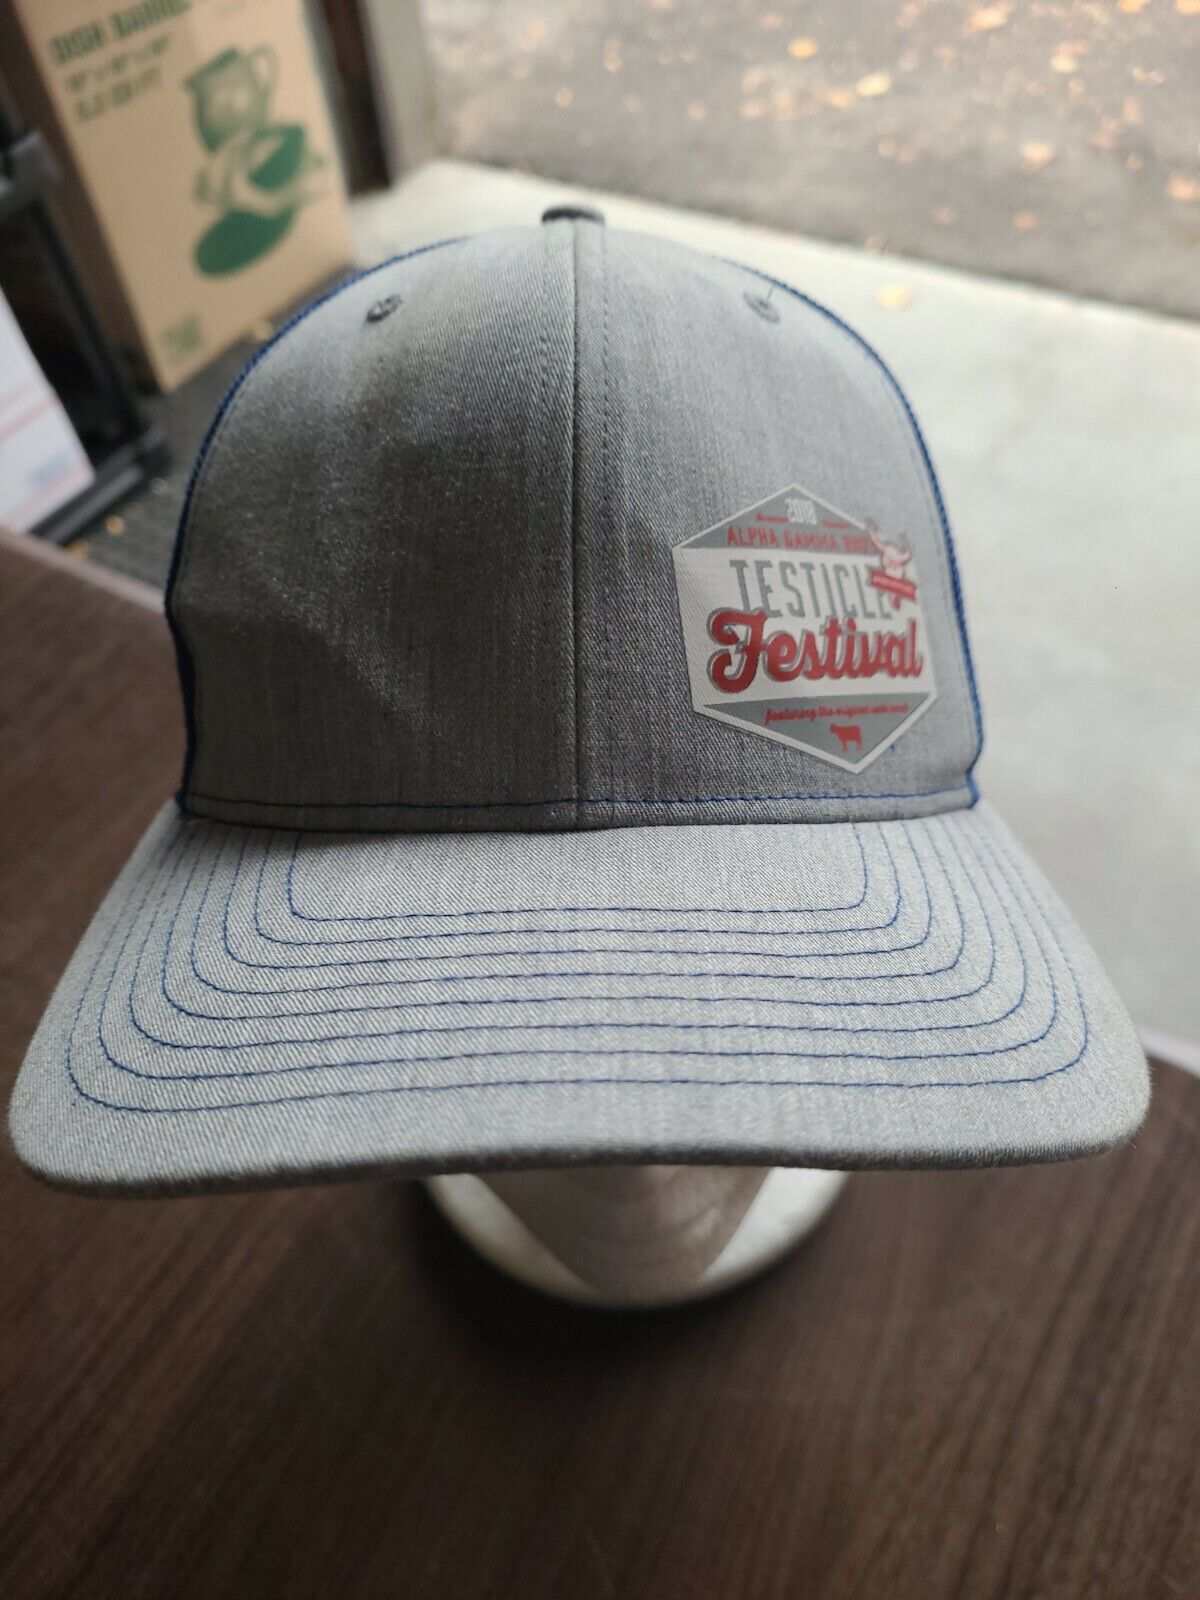 2018 Alpha Gamma Rhos Testicle Festival Baseball Hat